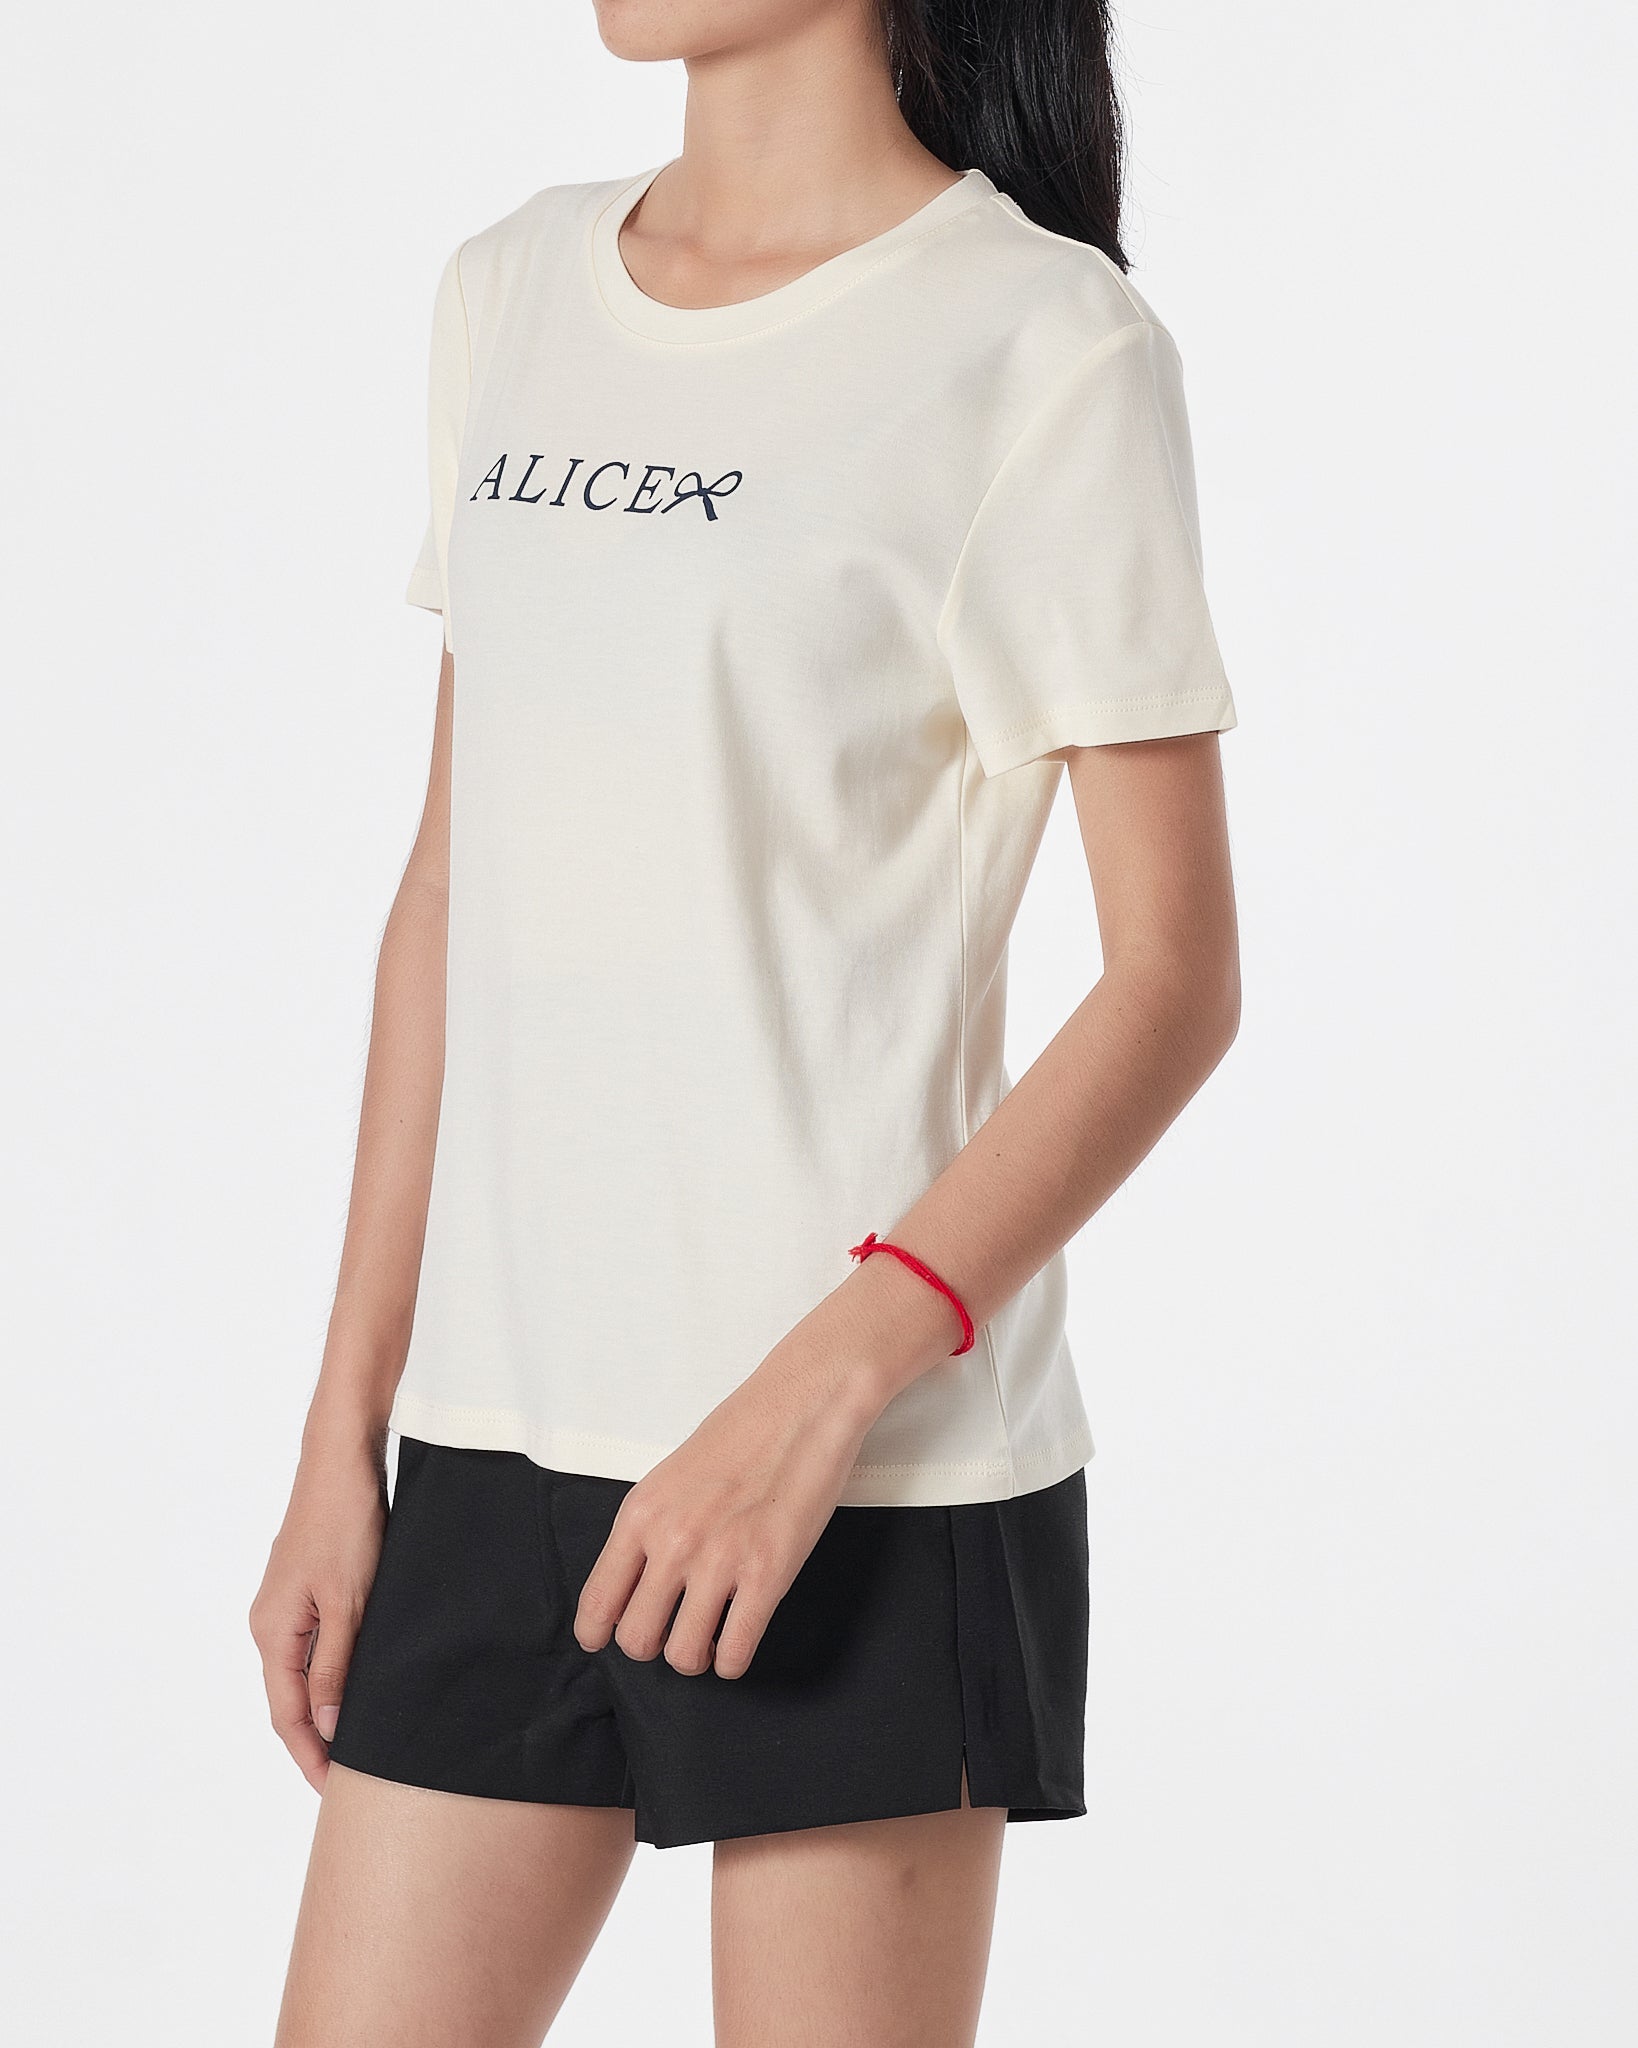 ALICE Lady Cream T-Shirt 12.90